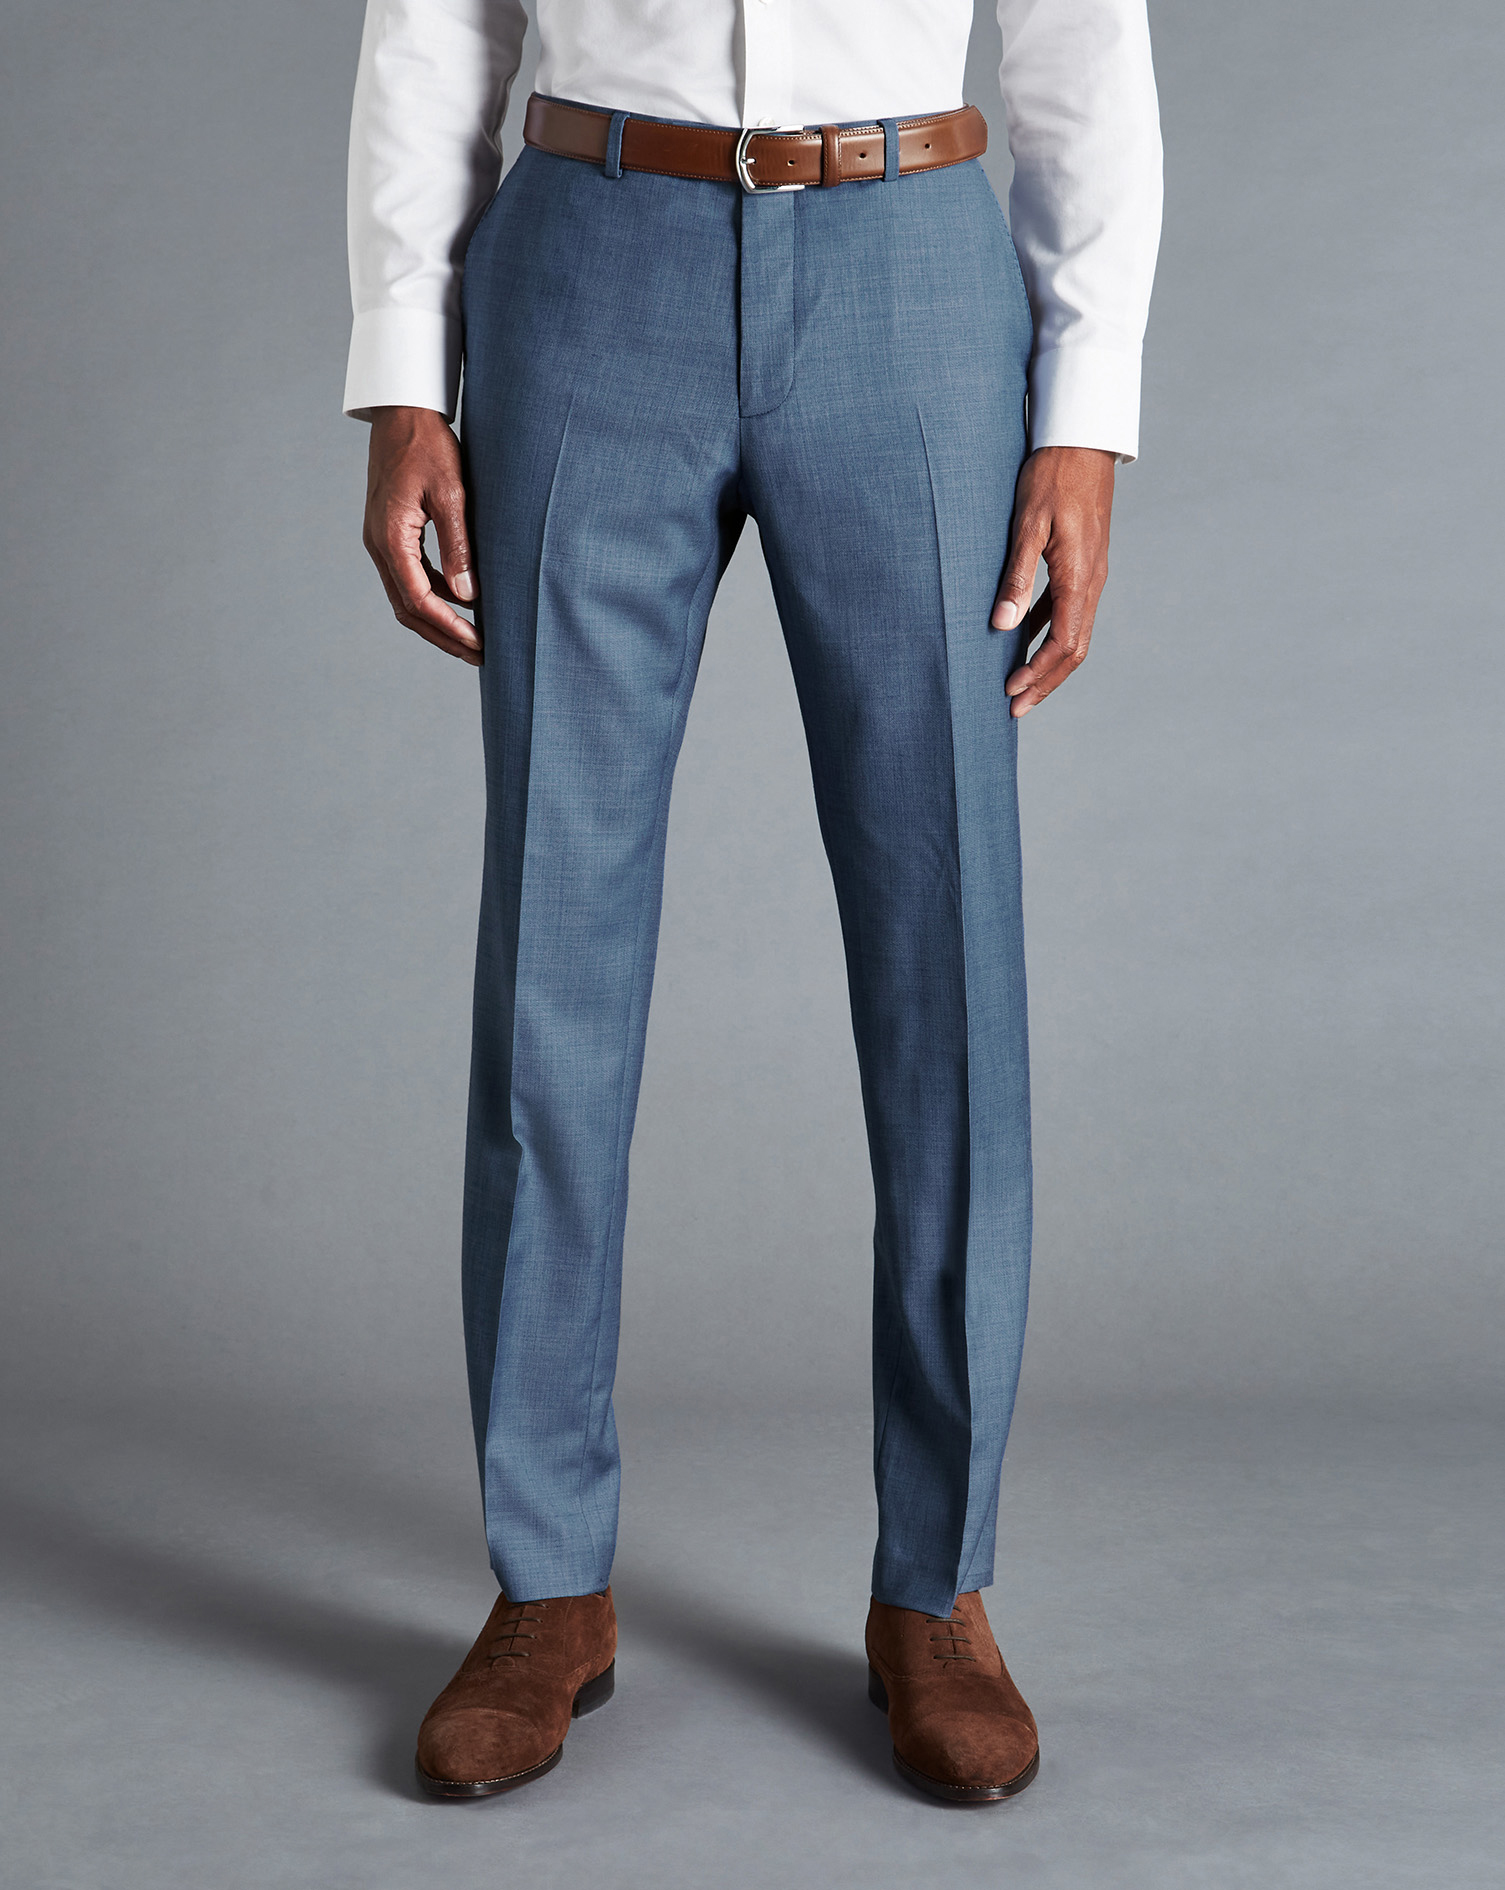 Men's Charles Tyrwhitt Sharkskin Suit Trousers - Cornflower Blue Size 36/32 Wool
